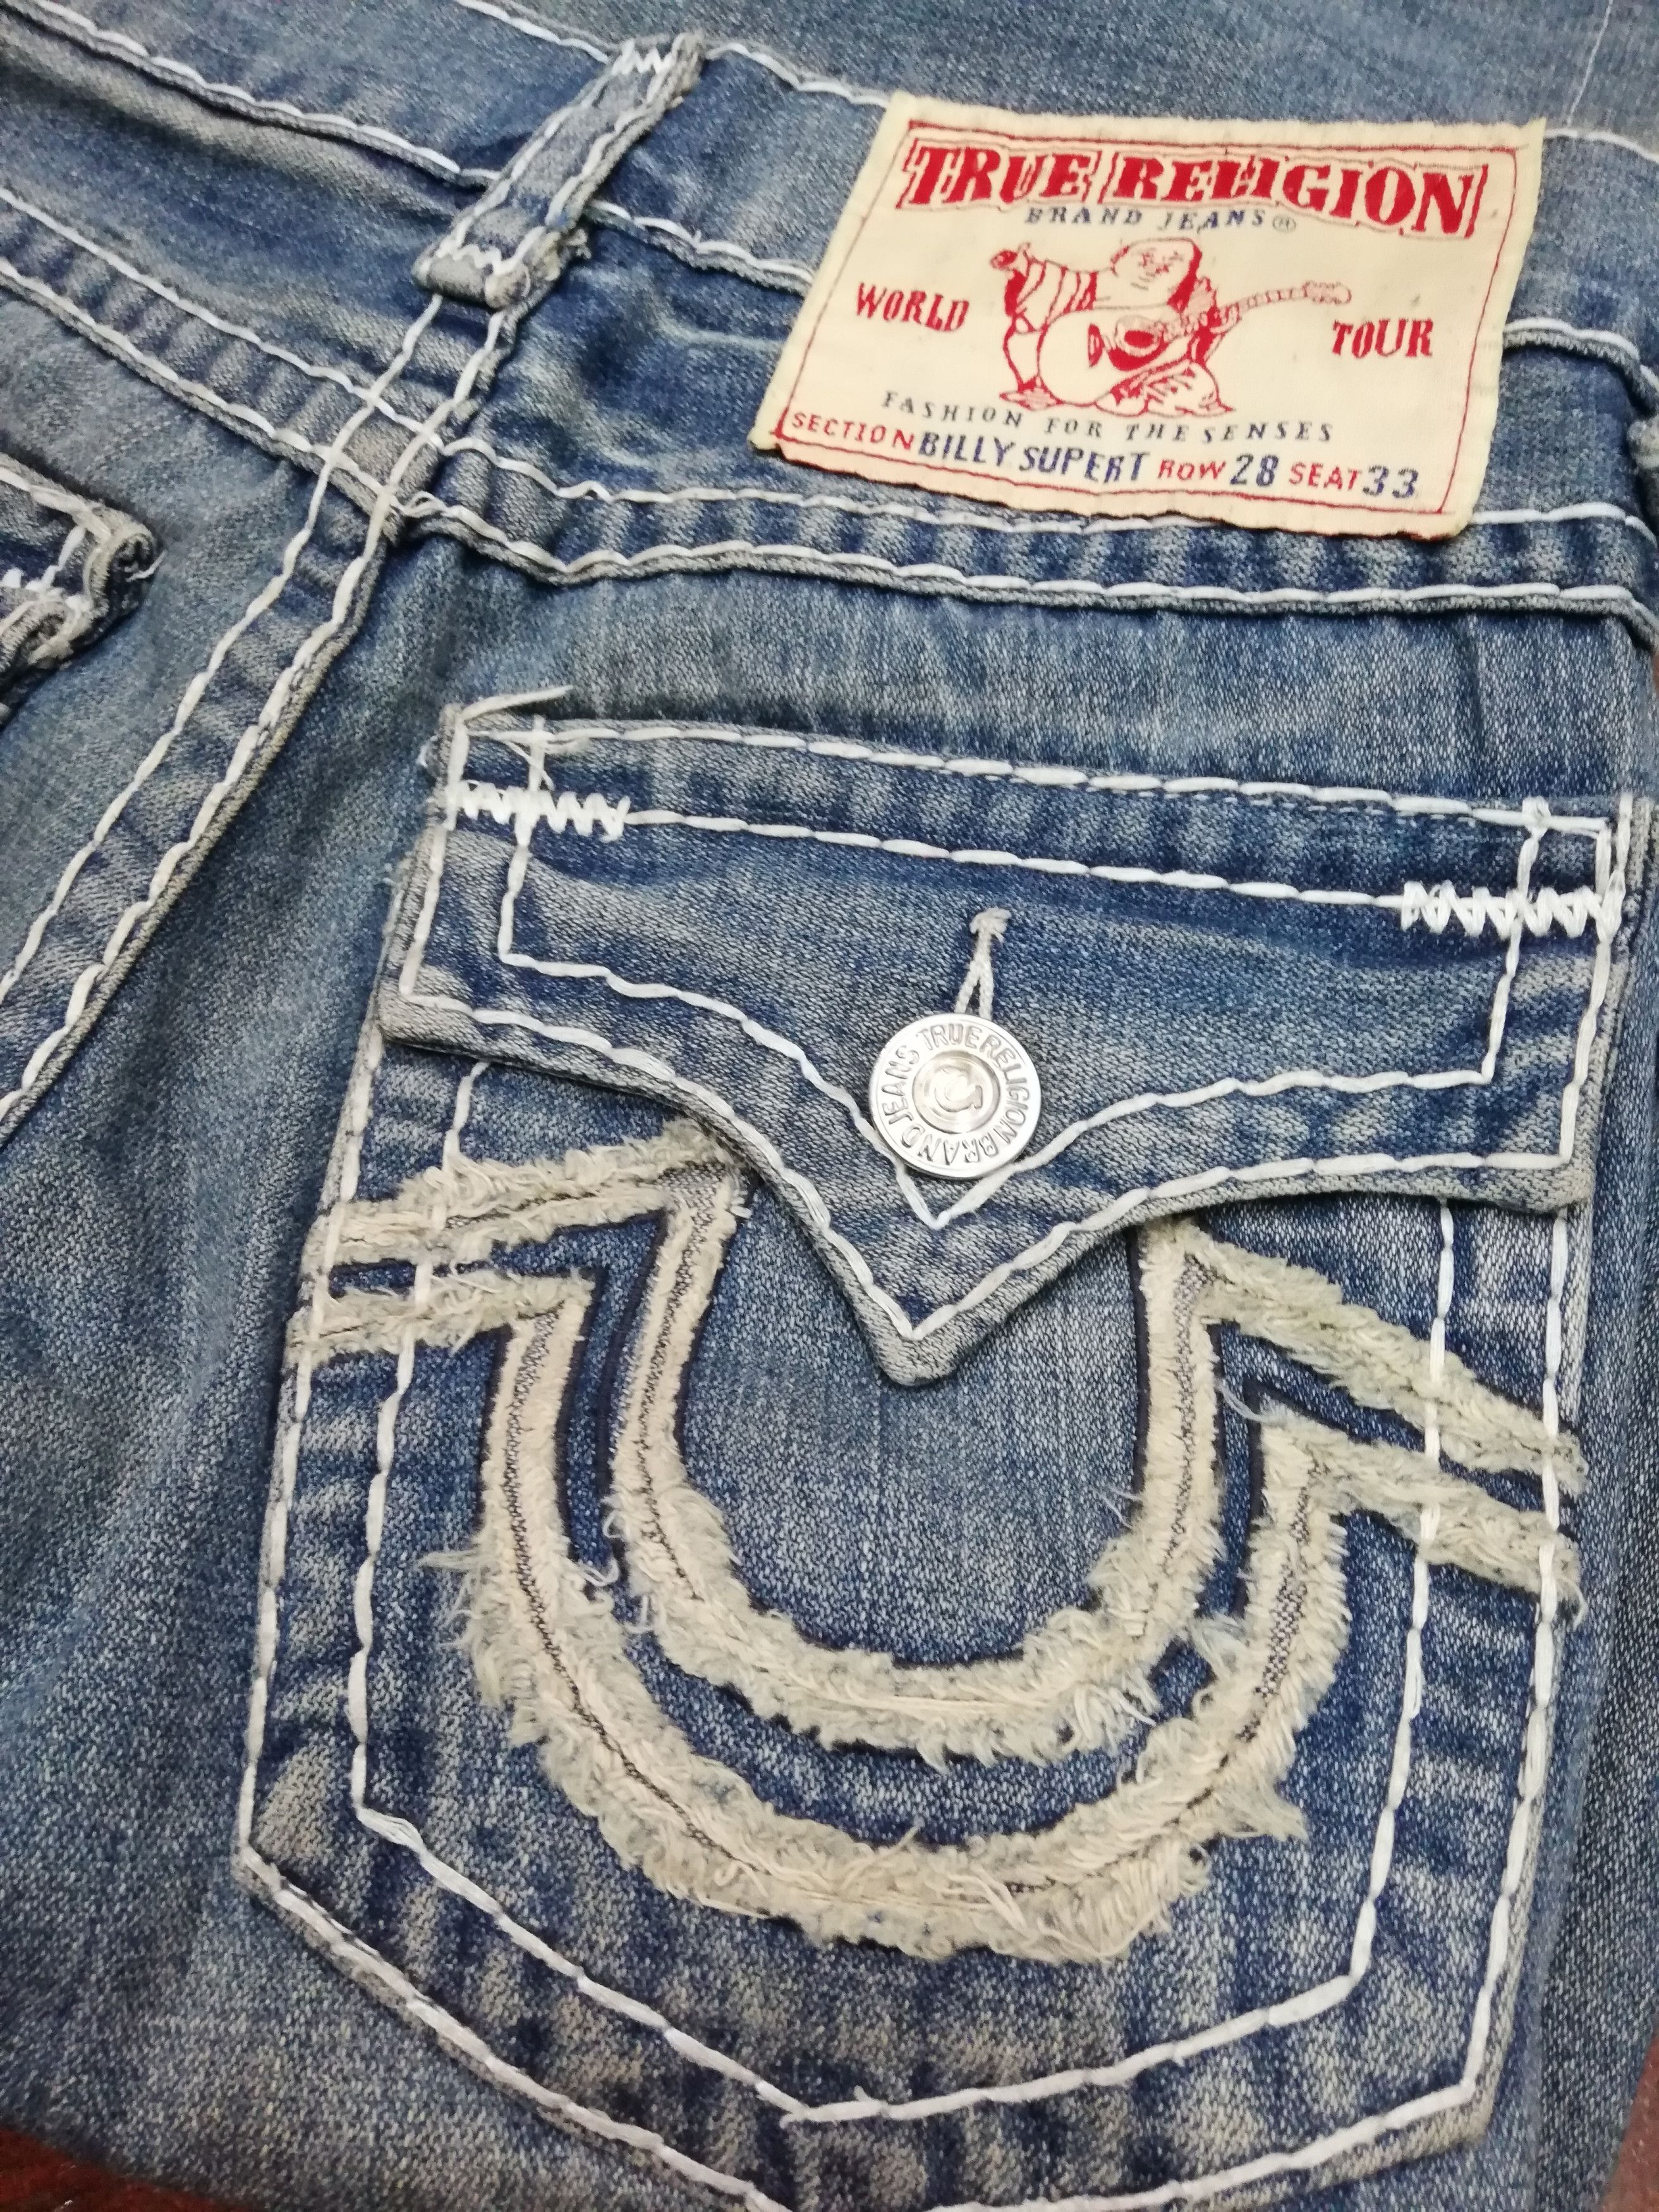 True Religion True Religion Billy Super T Row 28 Seat 33 Jeans